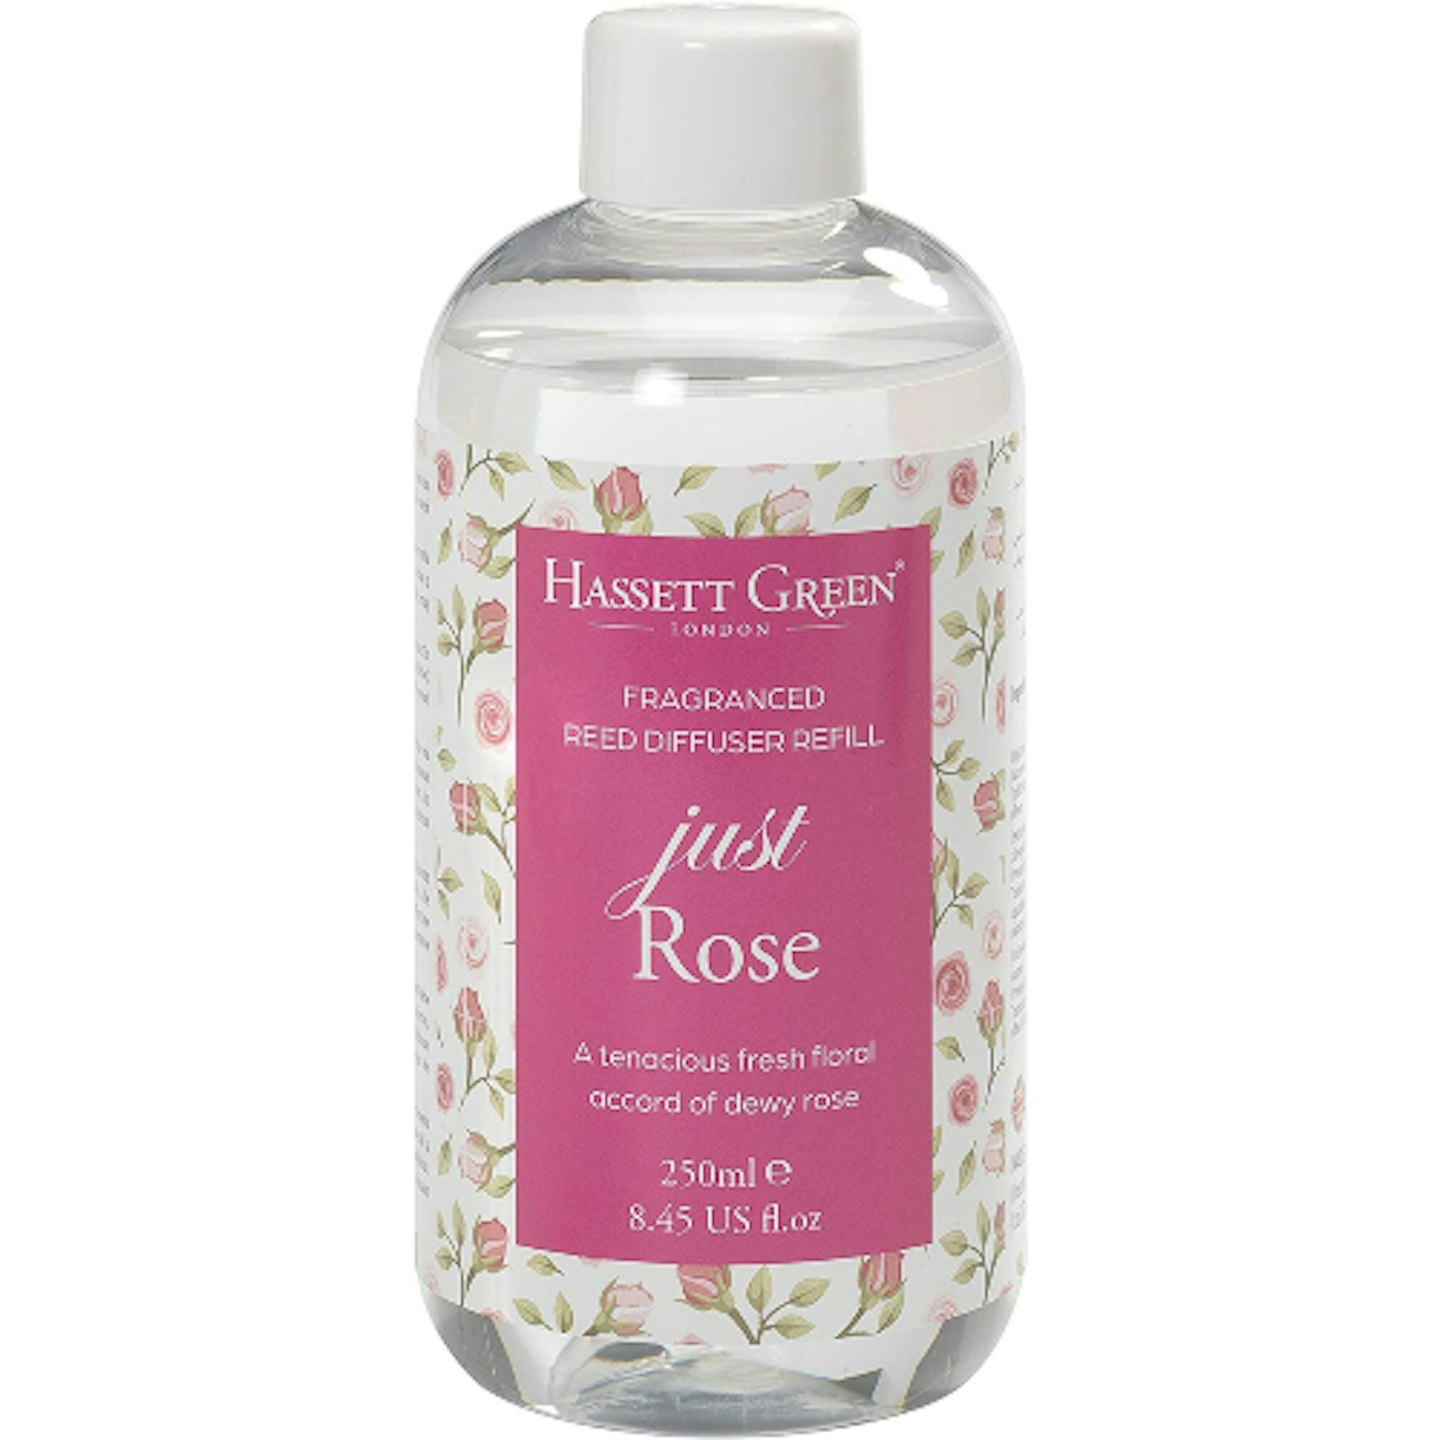 Rose diffuser oil